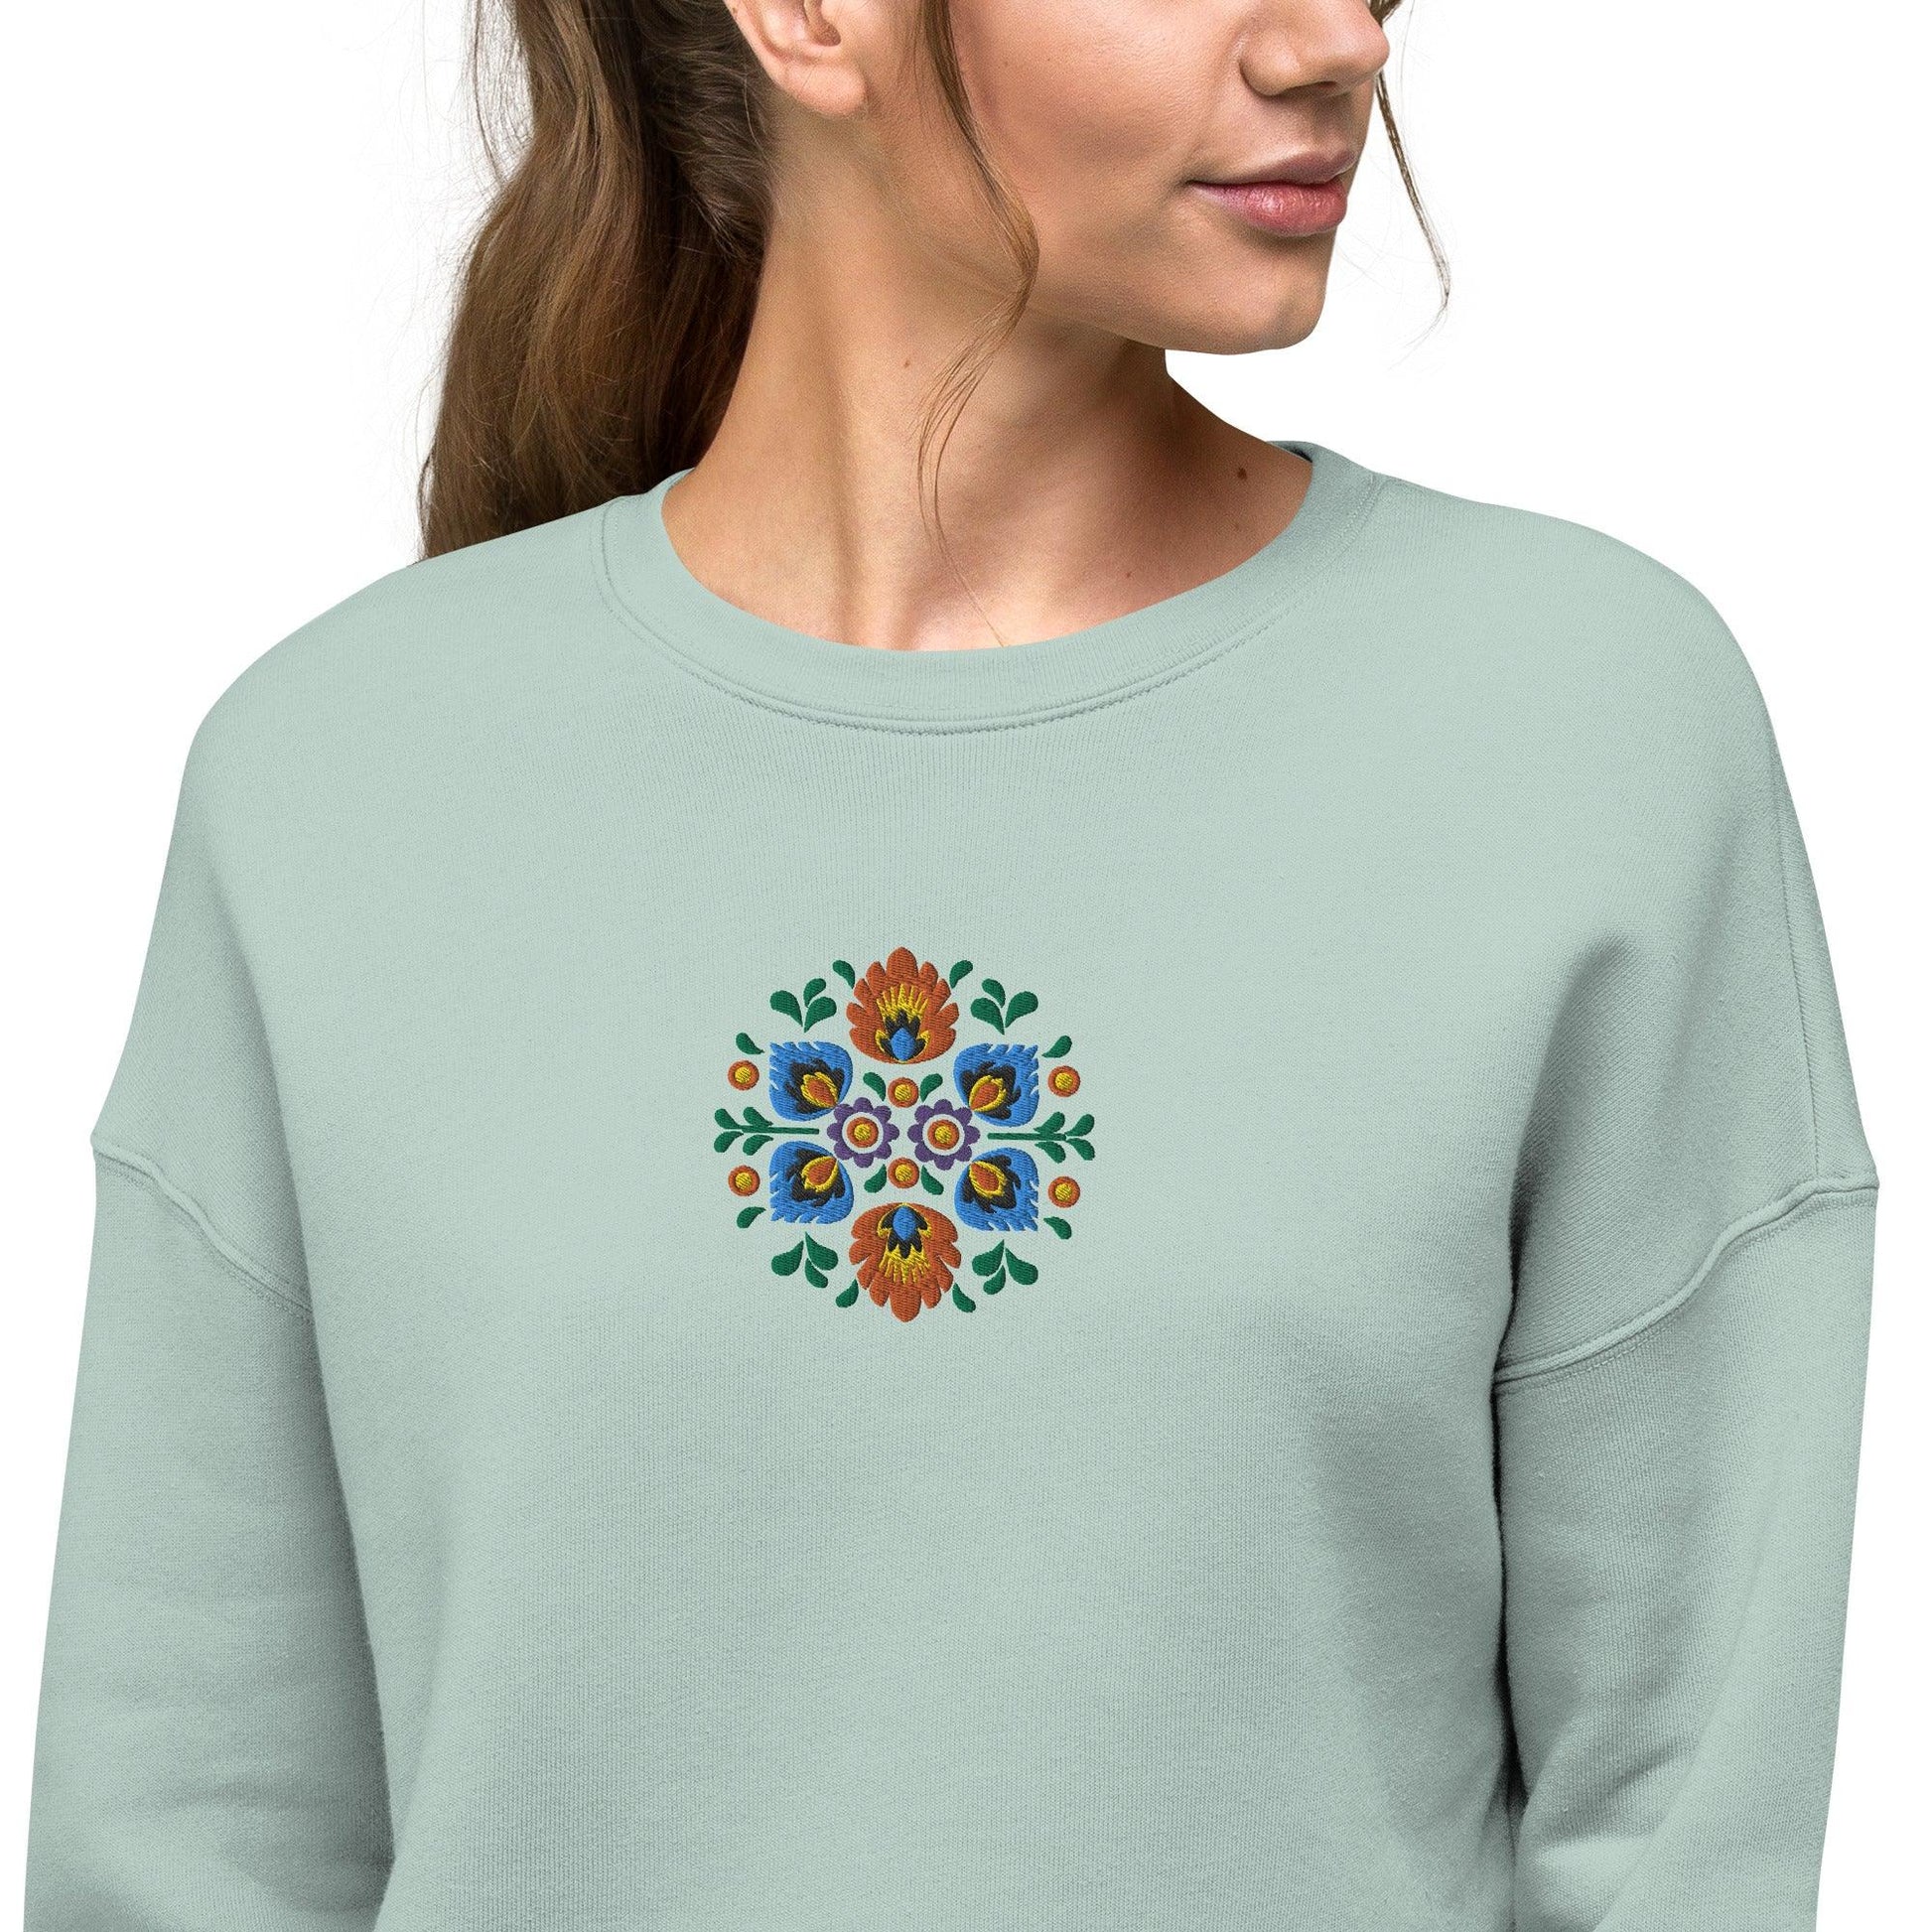 Polish Wycinanki Cropped Sweatshirt - Embroidered - The Global Wanderer